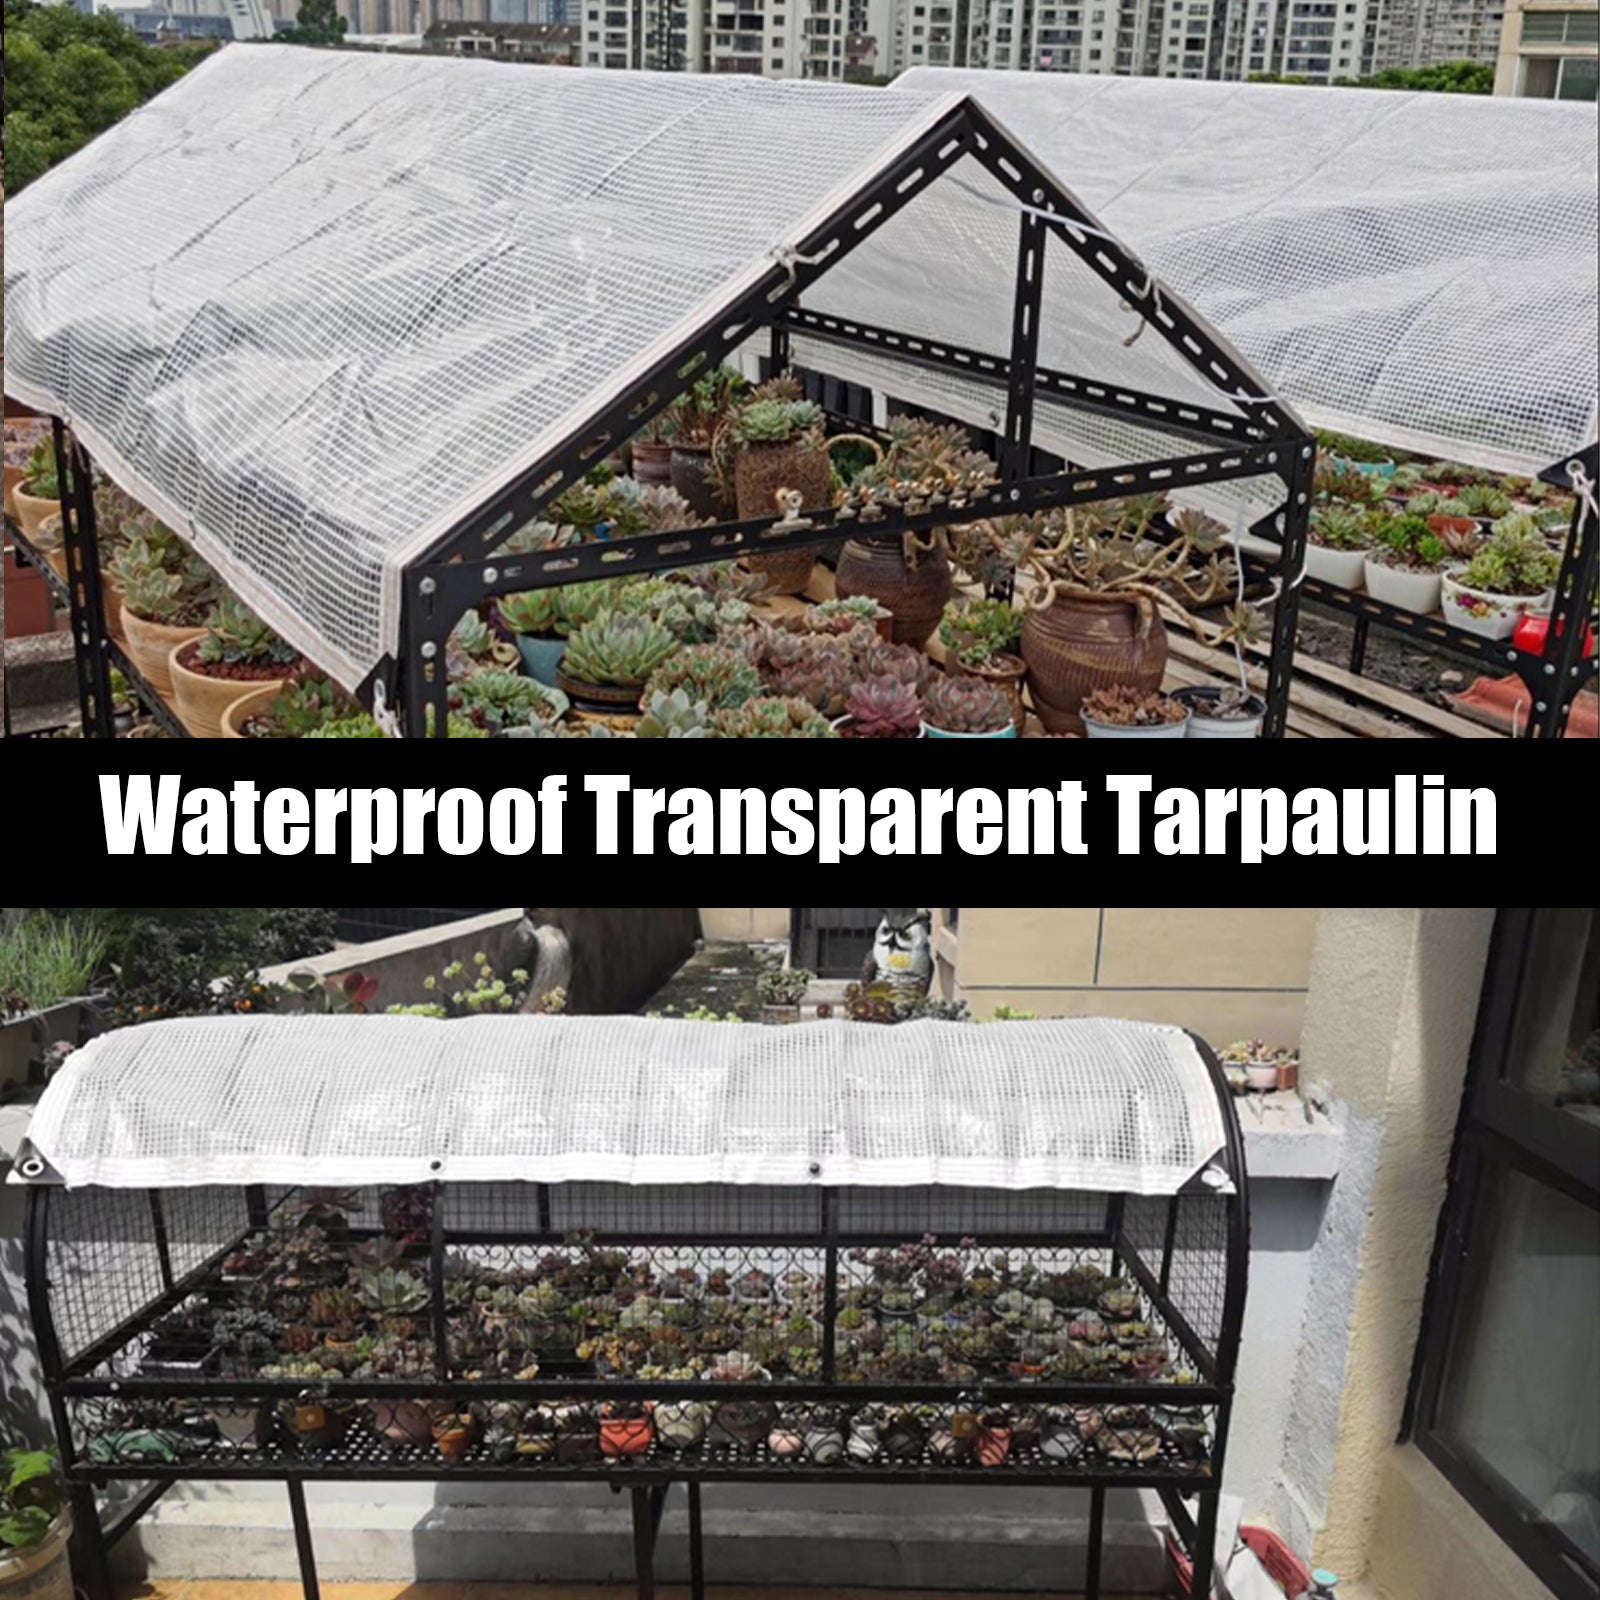 Greenhouse Tarps Clear Heavy Tarp Waterproof Cover Long Lasting UV Stabilised Universal All-Purpose Tarpaulin with Grommets for Gardening,Farming,Nursery,Garden